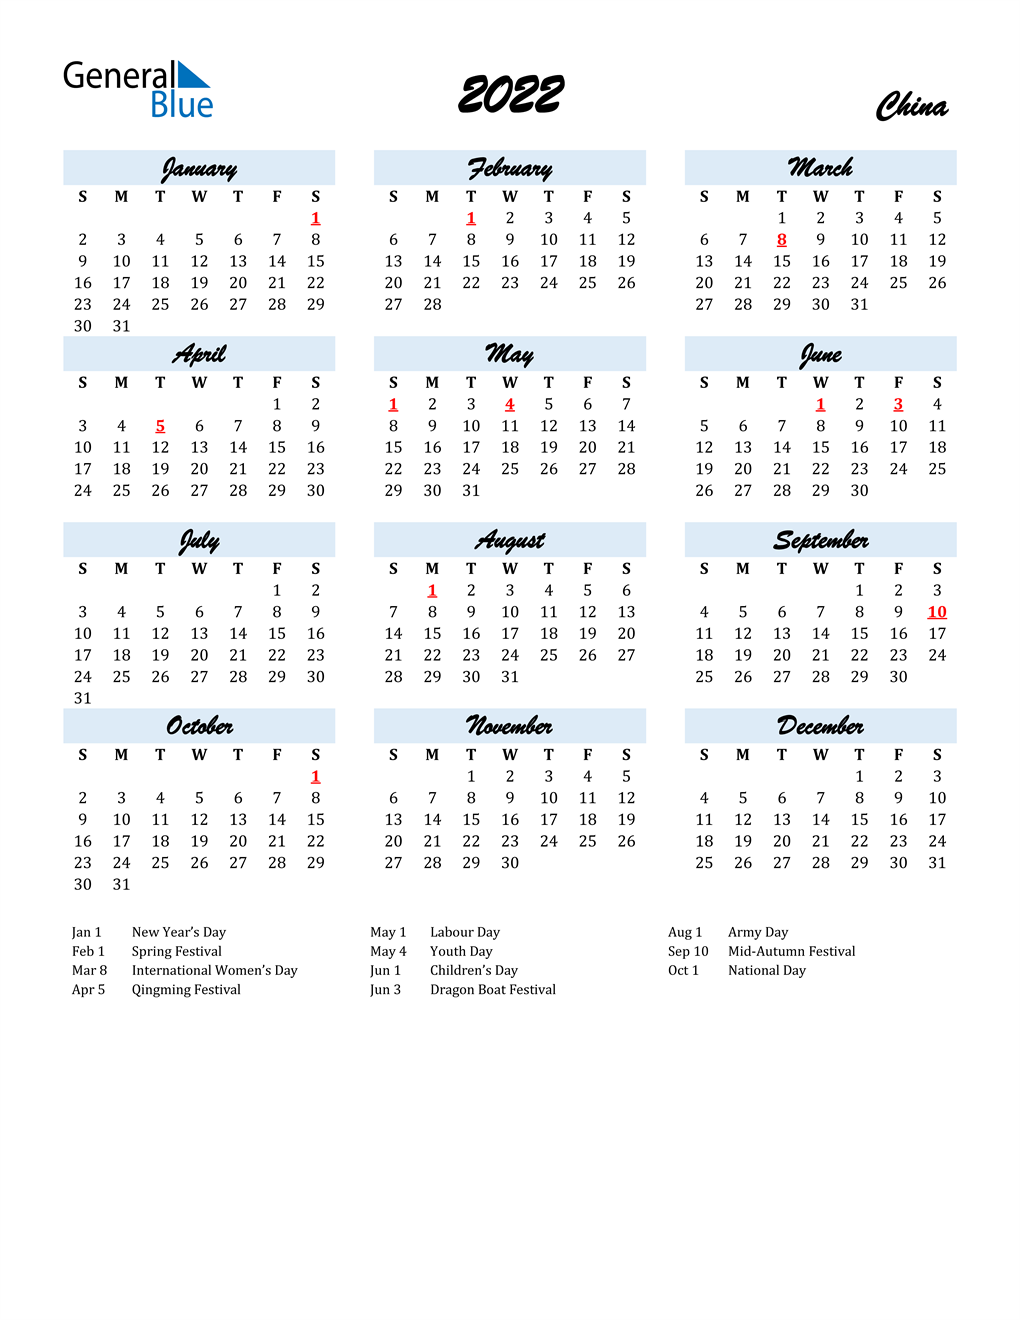 Chinese Holiday Calendar 2022 2022 China Calendar With Holidays